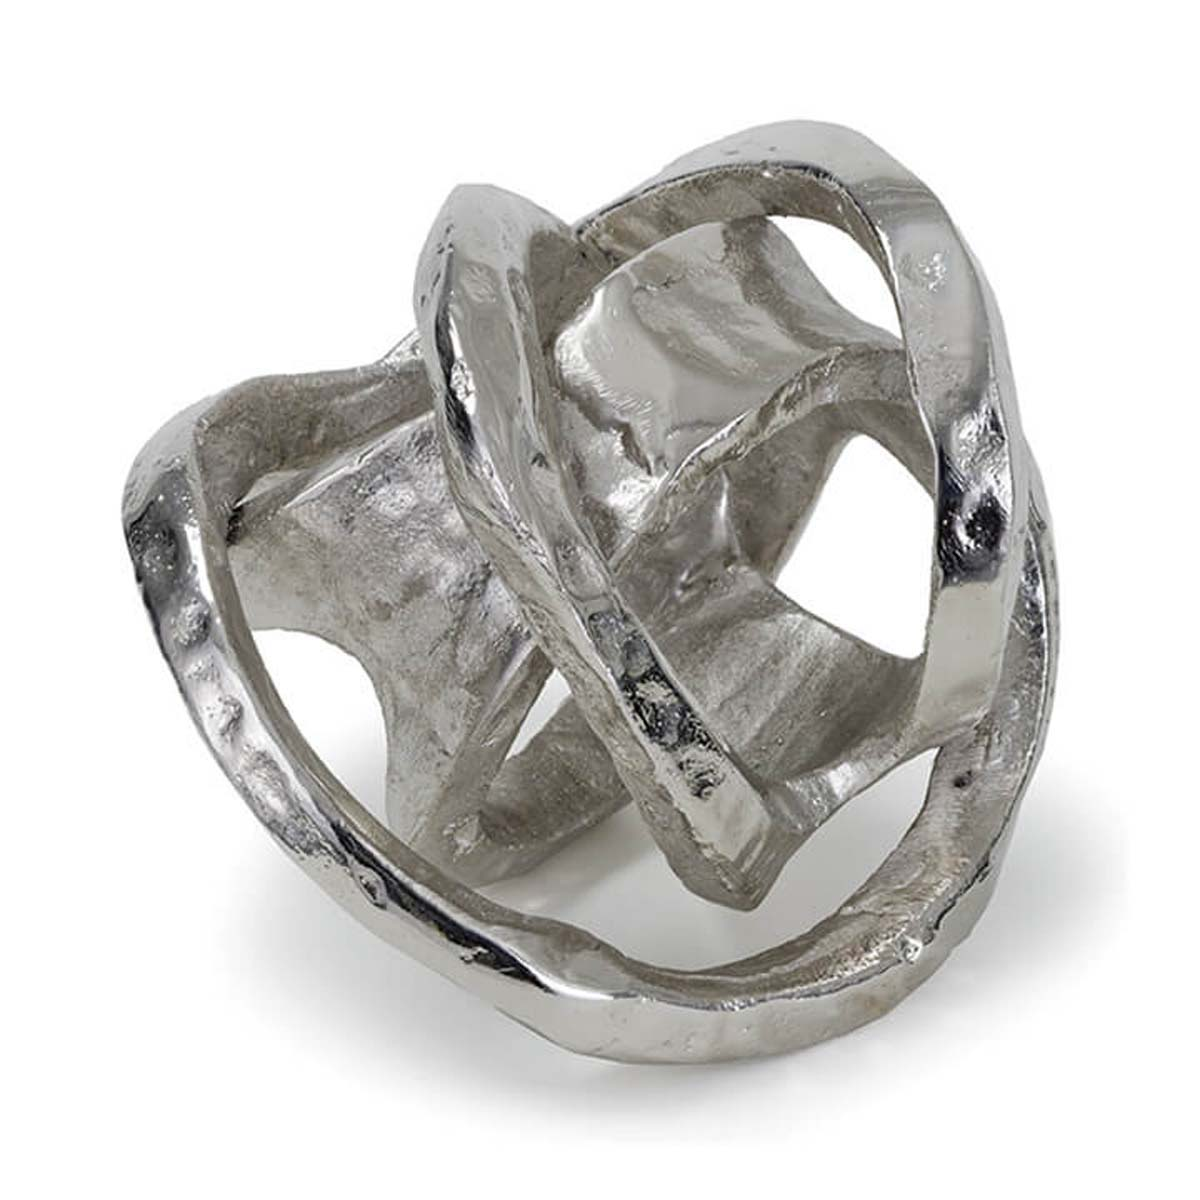 Regina Andrew Metal Knot (Polished Nickel)